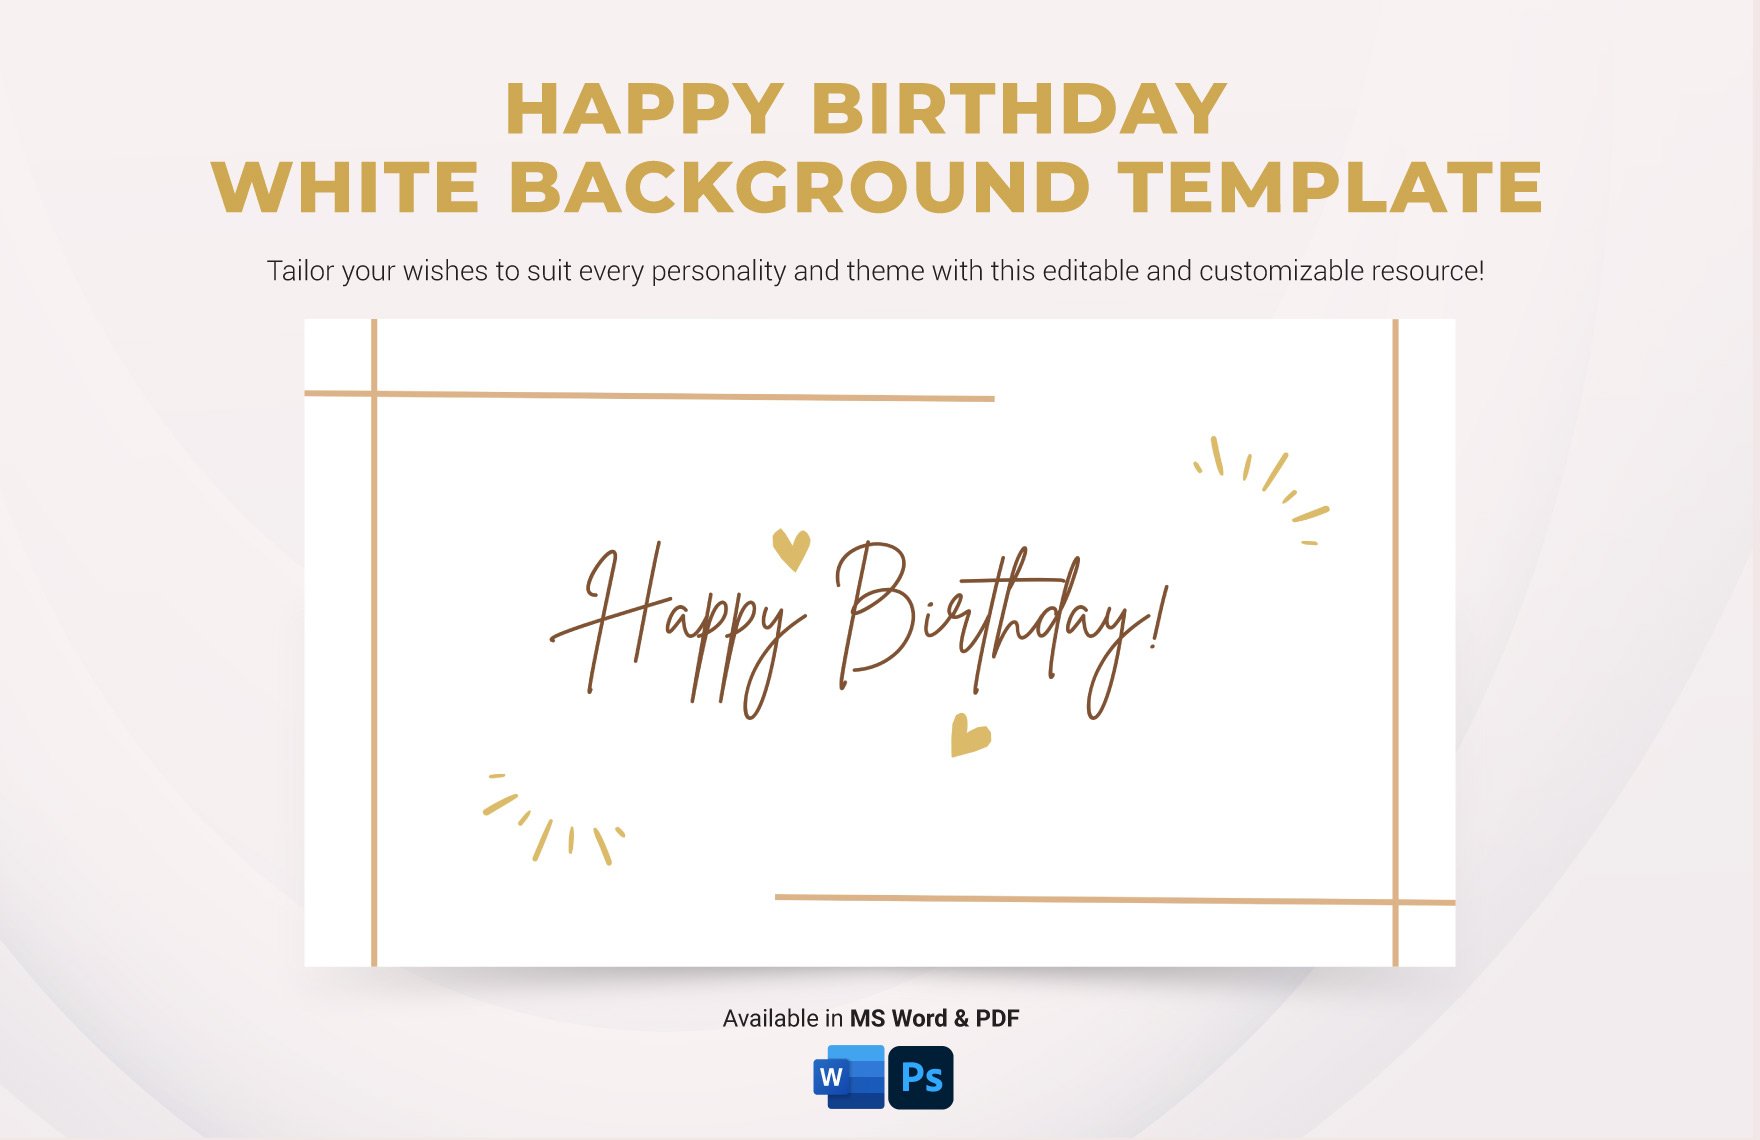 Happy Birthday White Background Template